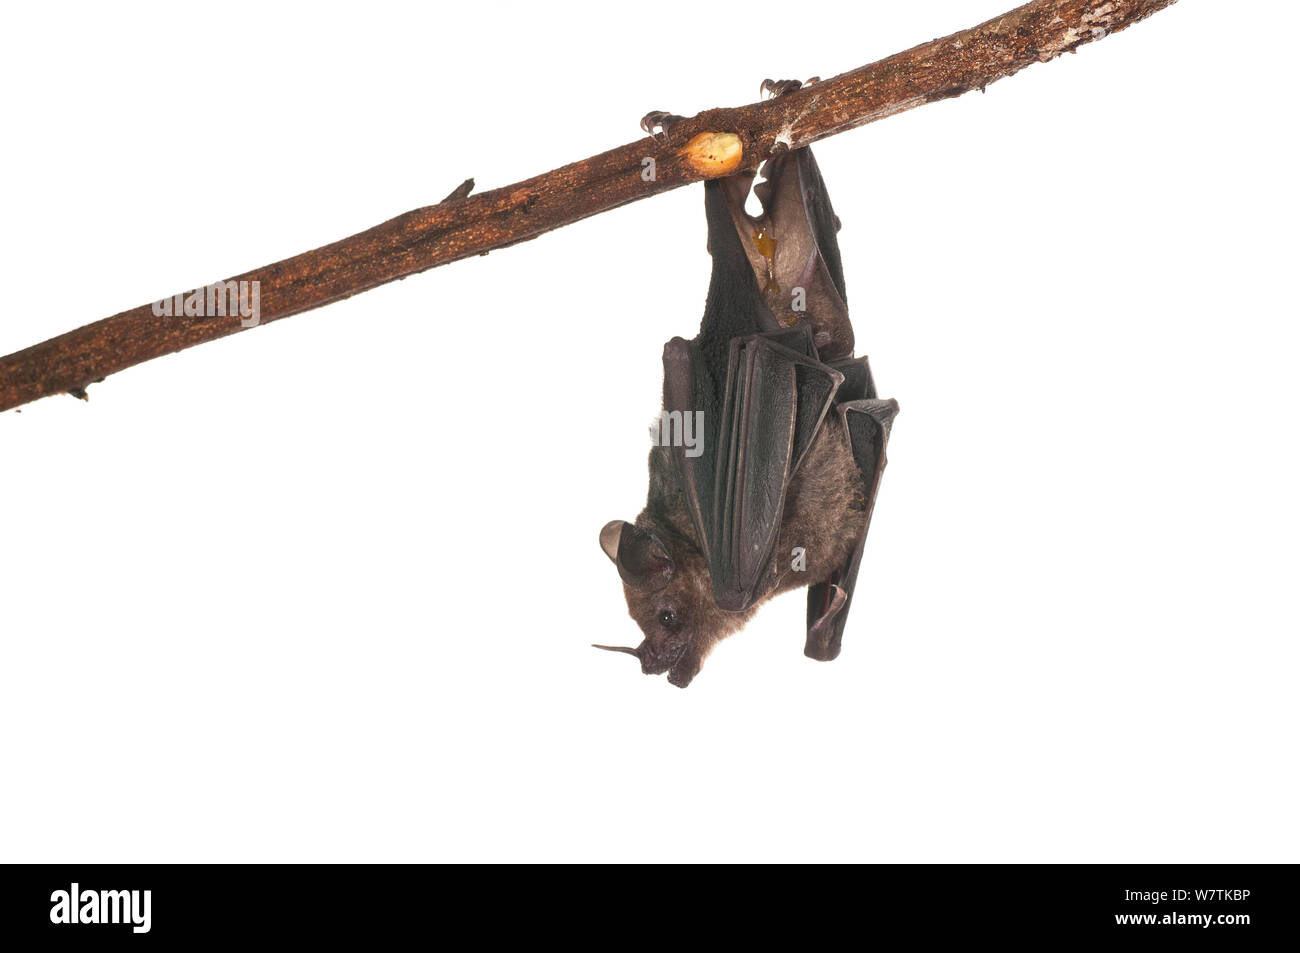 Greater spear nosed bat (Phyllostomus hastatus) Surama, Guyana. Meetyourneighbours.net project Stock Photo